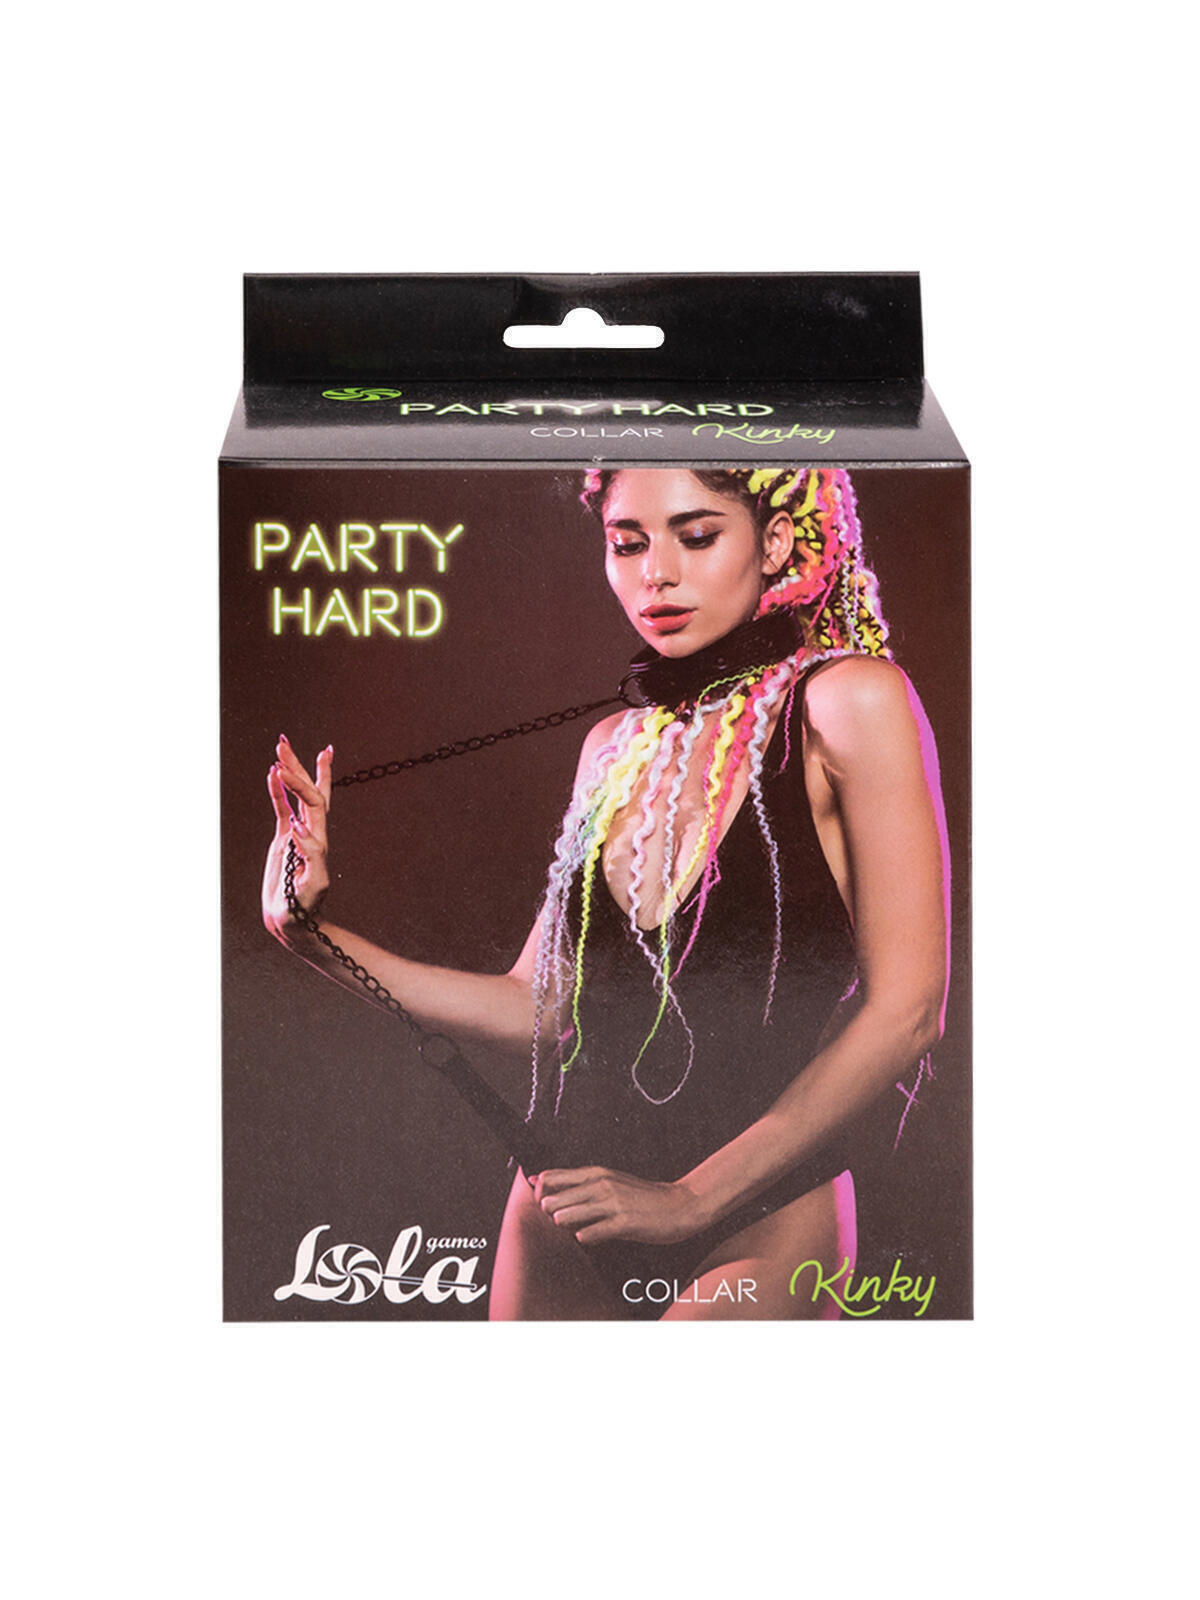 Ошейник Party Hard Kinky Lola Games Party Hard